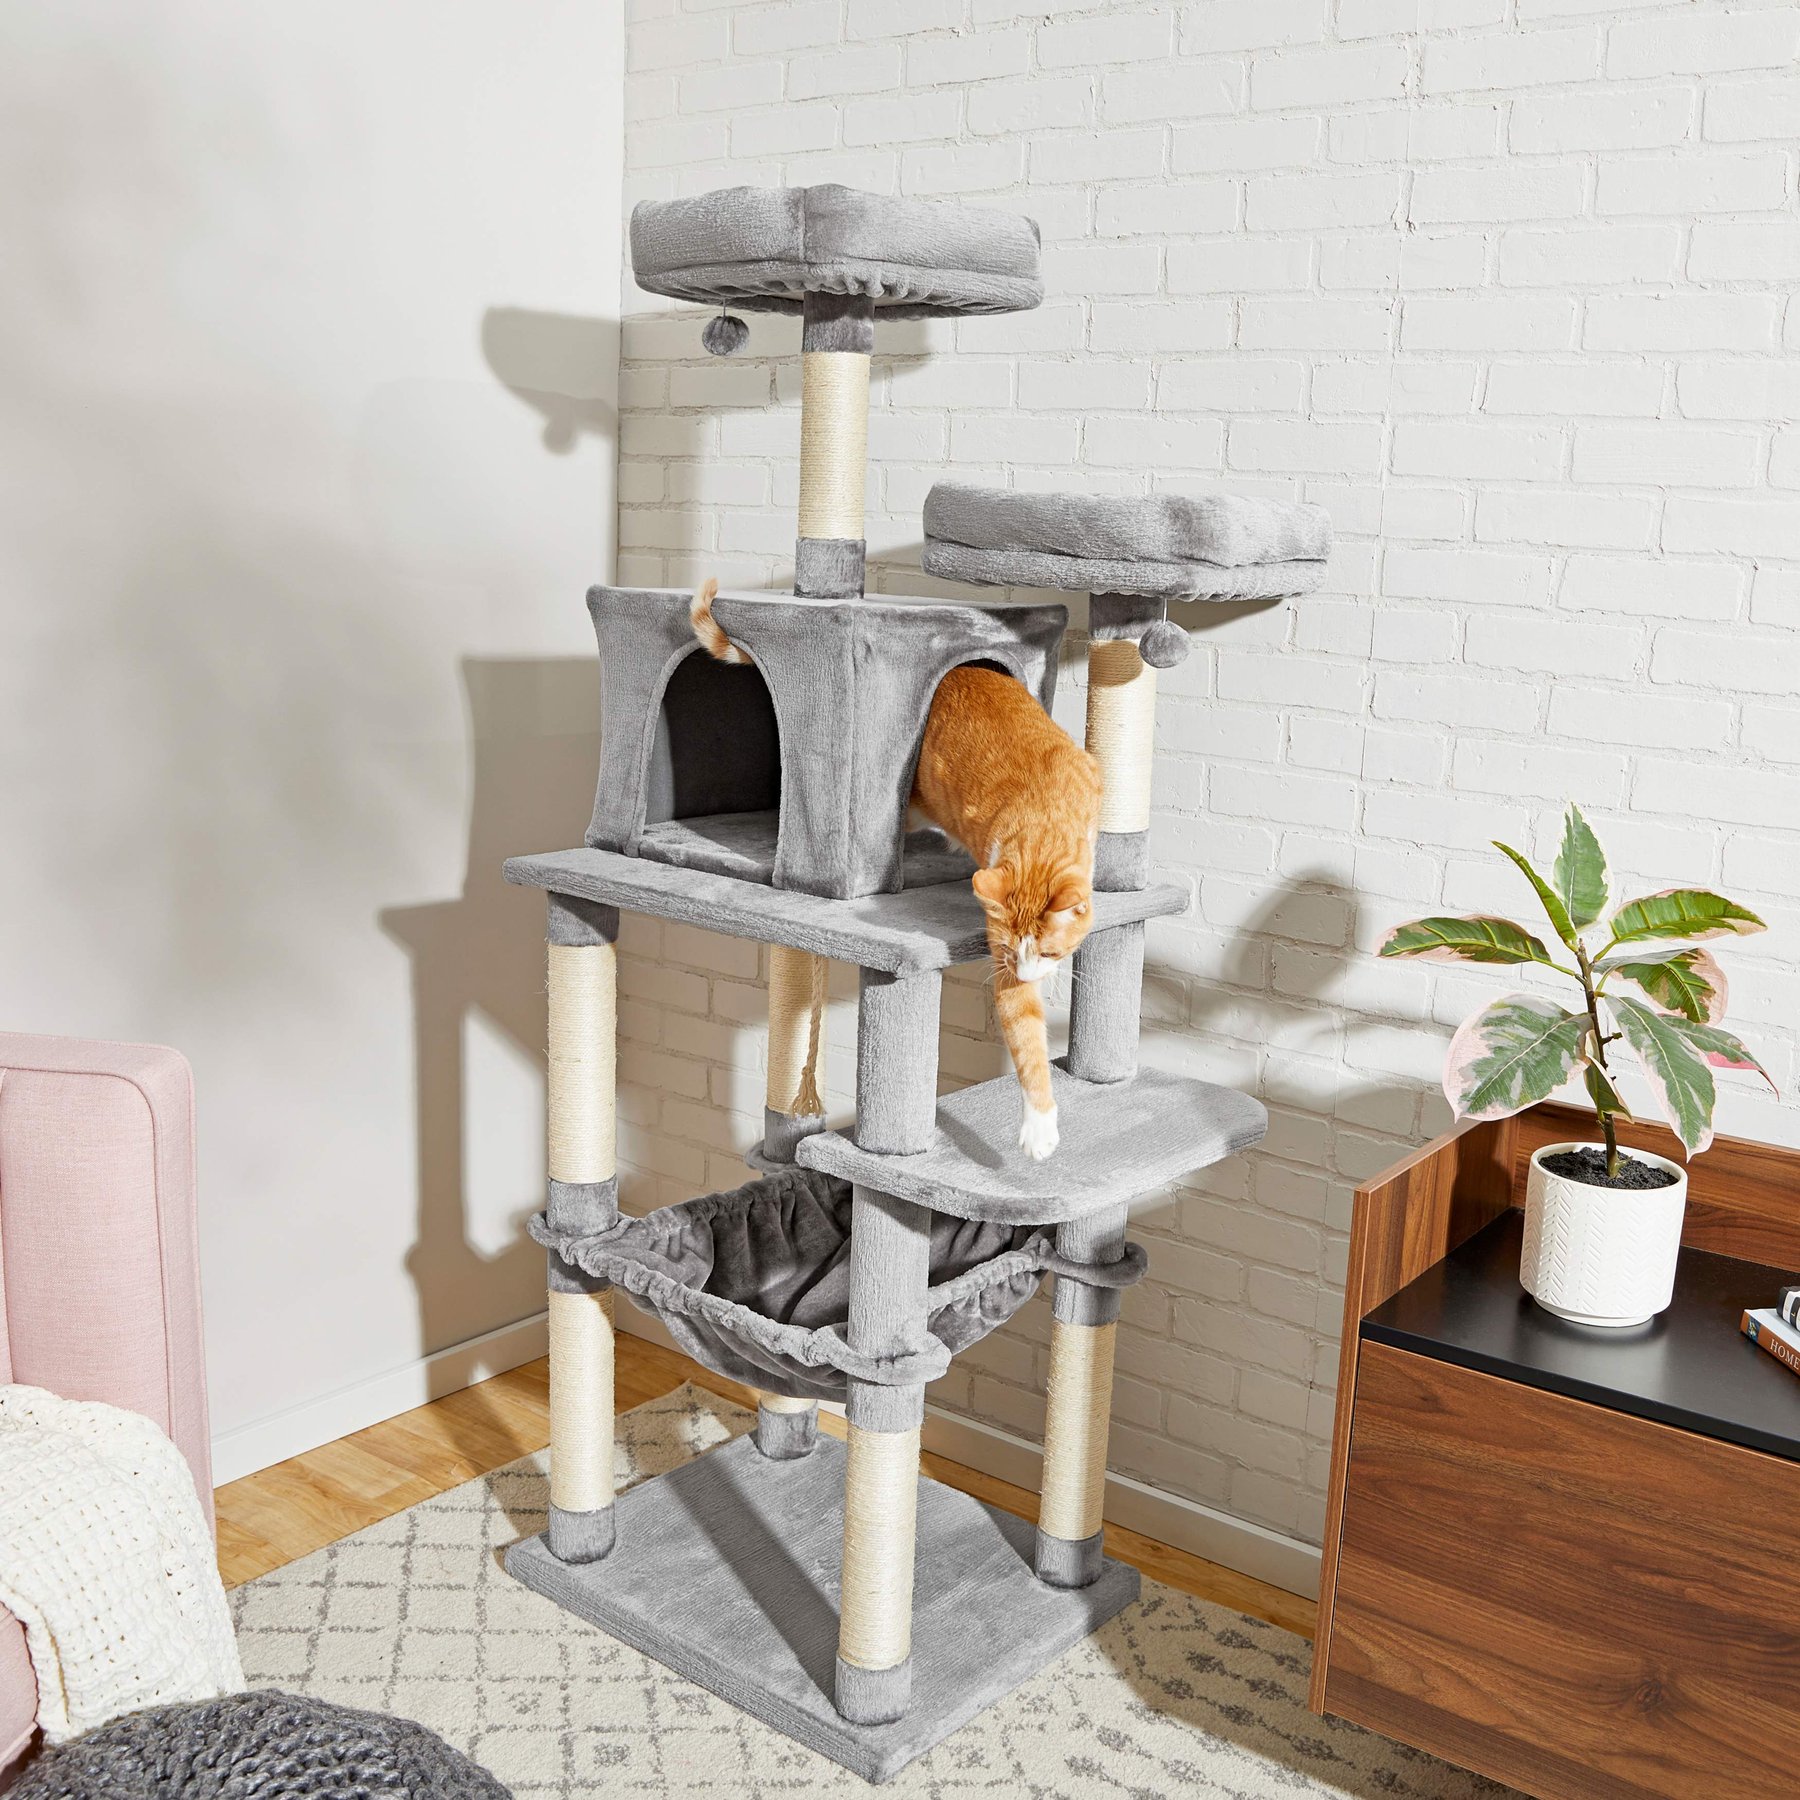 Boston Cat Tree – Kitty Mansions